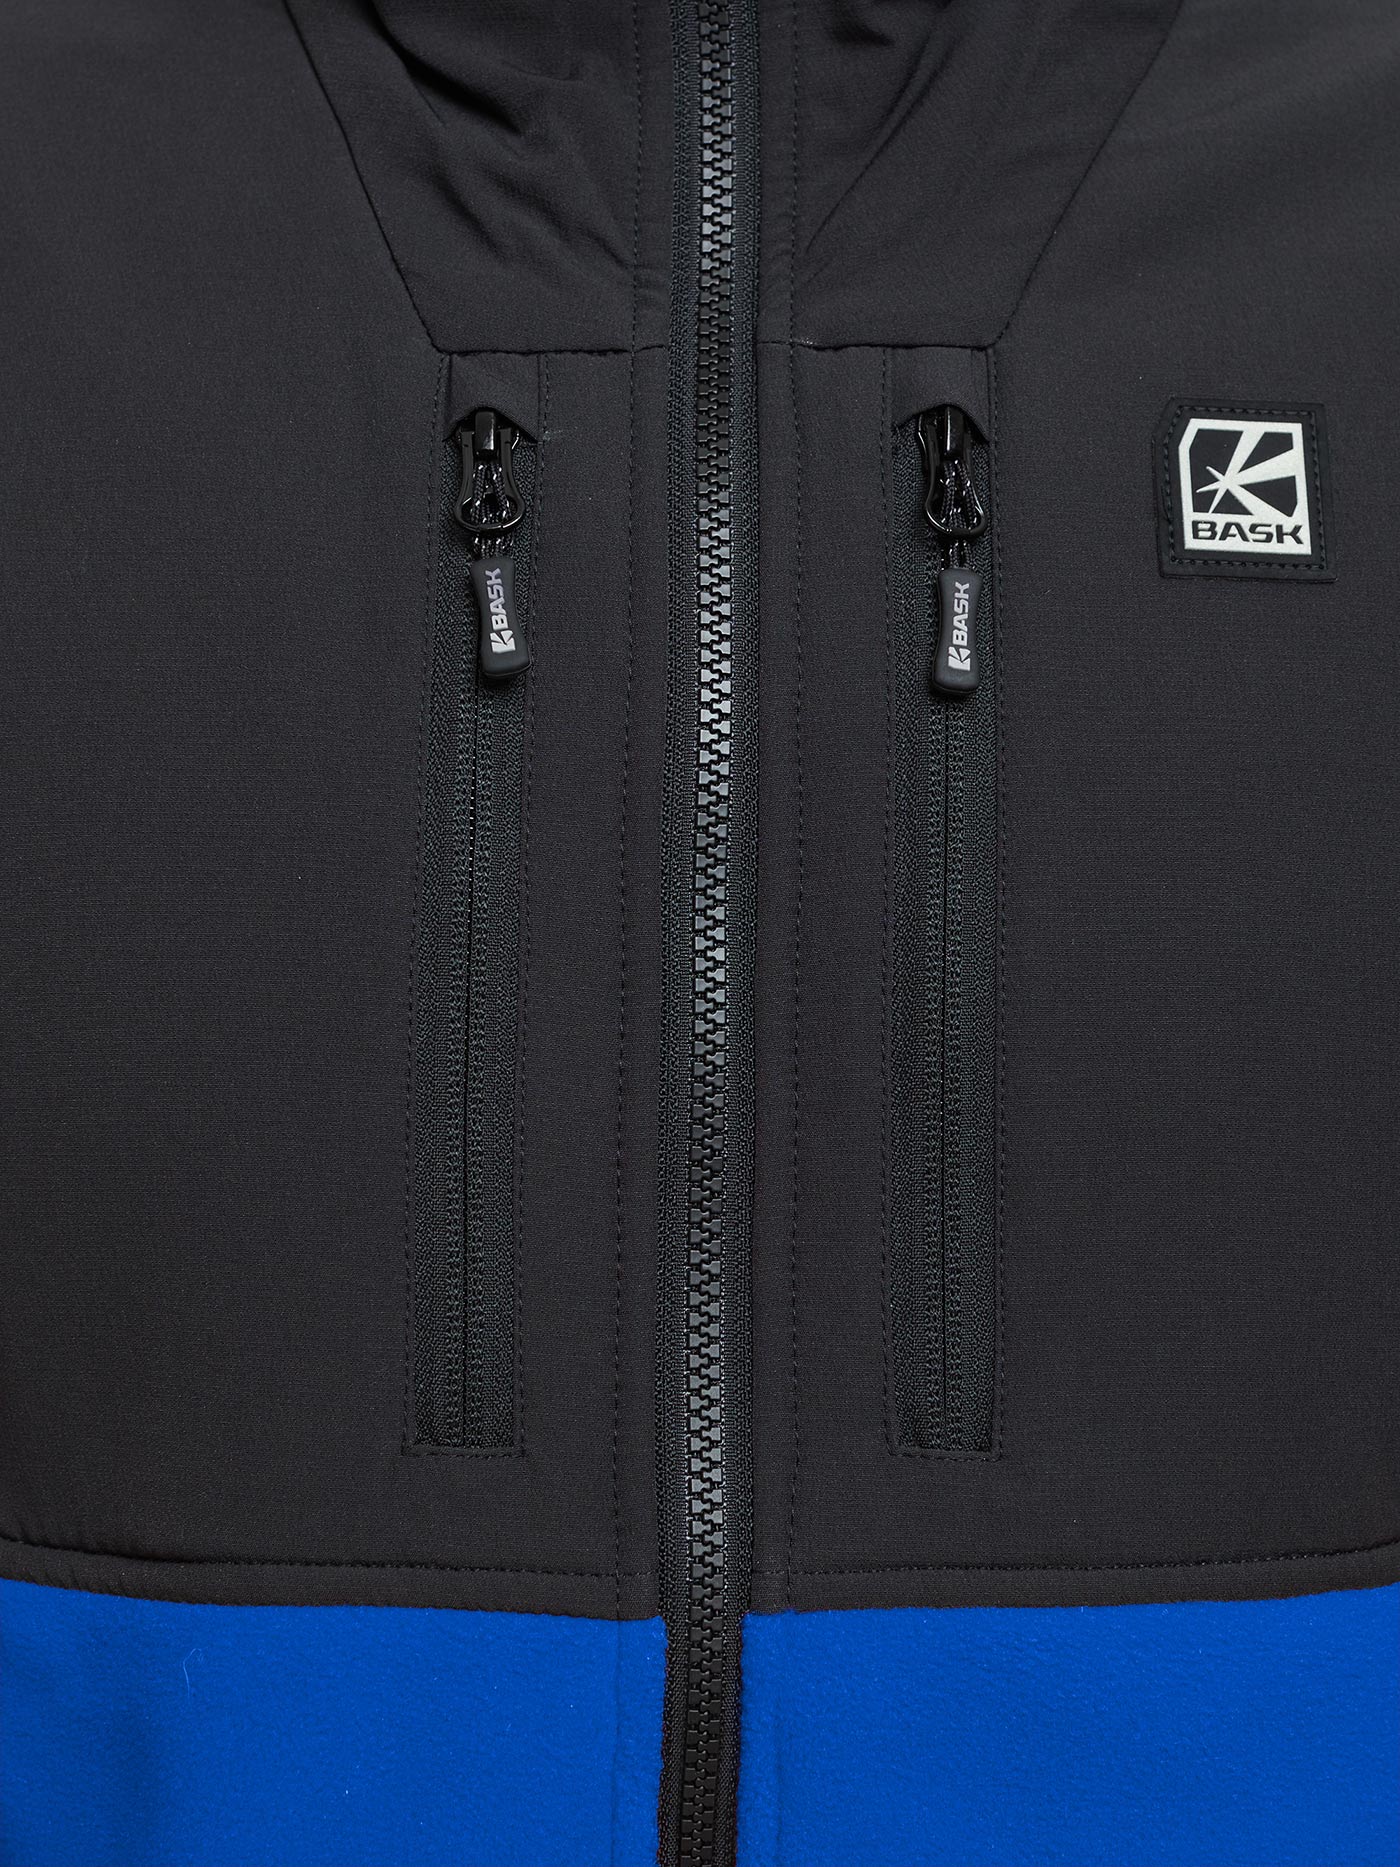 Куртка BASK, размер 48, цвет синий 2262-9305-048 Guide - фото 5